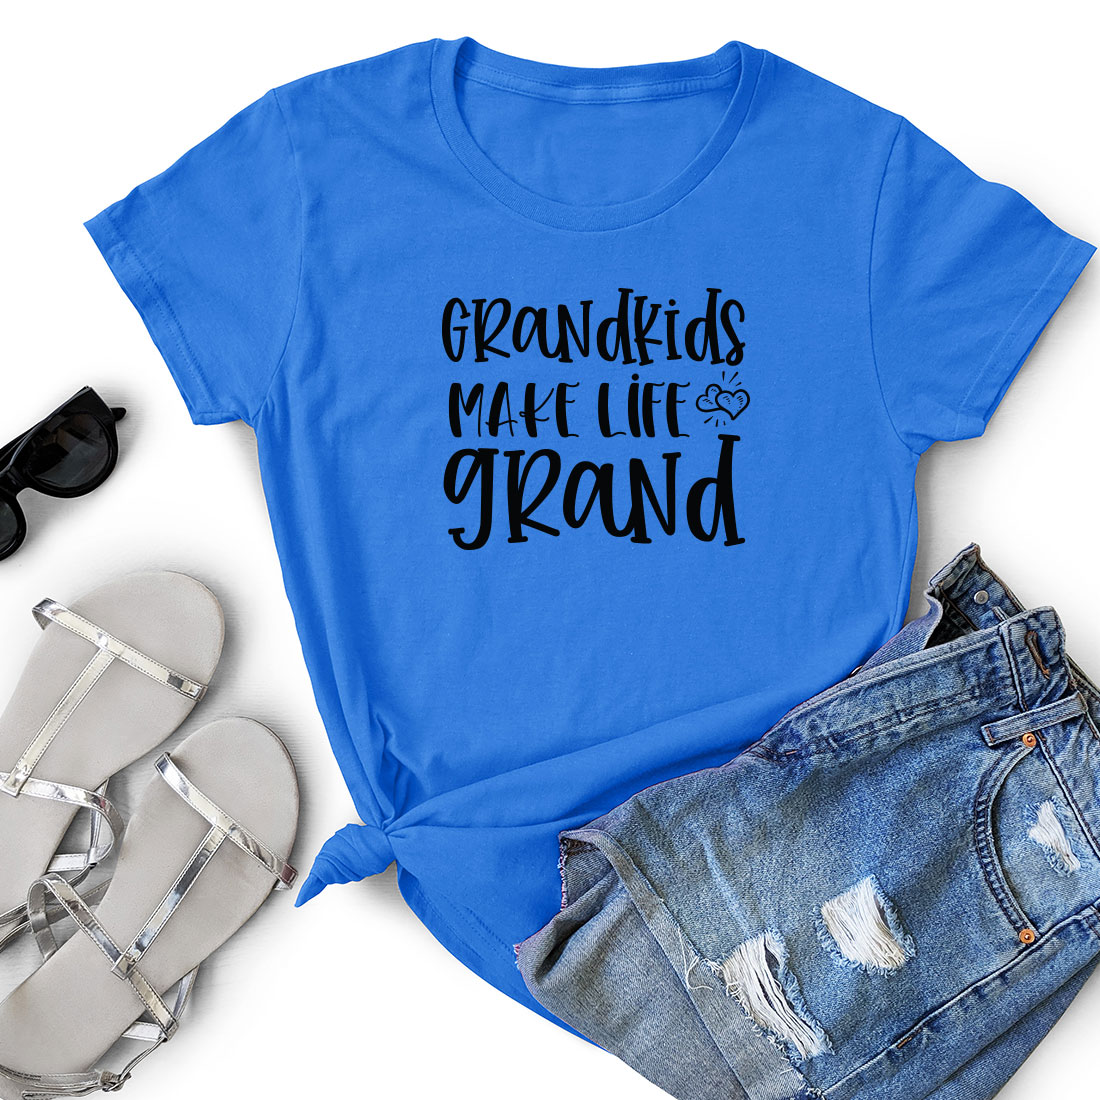 Blue shirt that says grandkids make life grand.